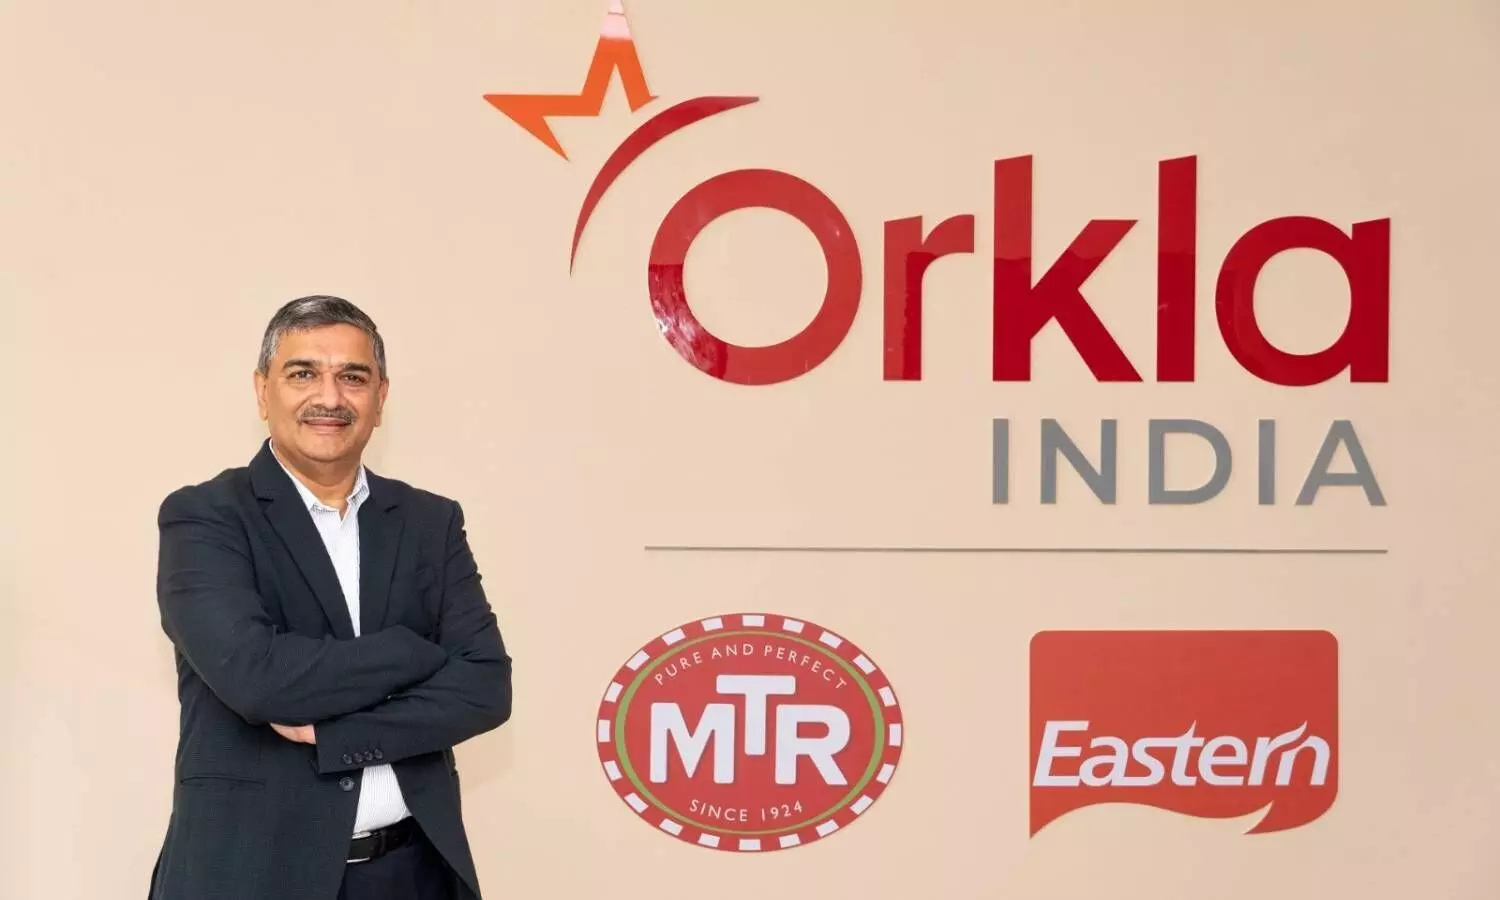 Sanjay Sharma, CEO, Orkla India & logo of mtr & Eastern